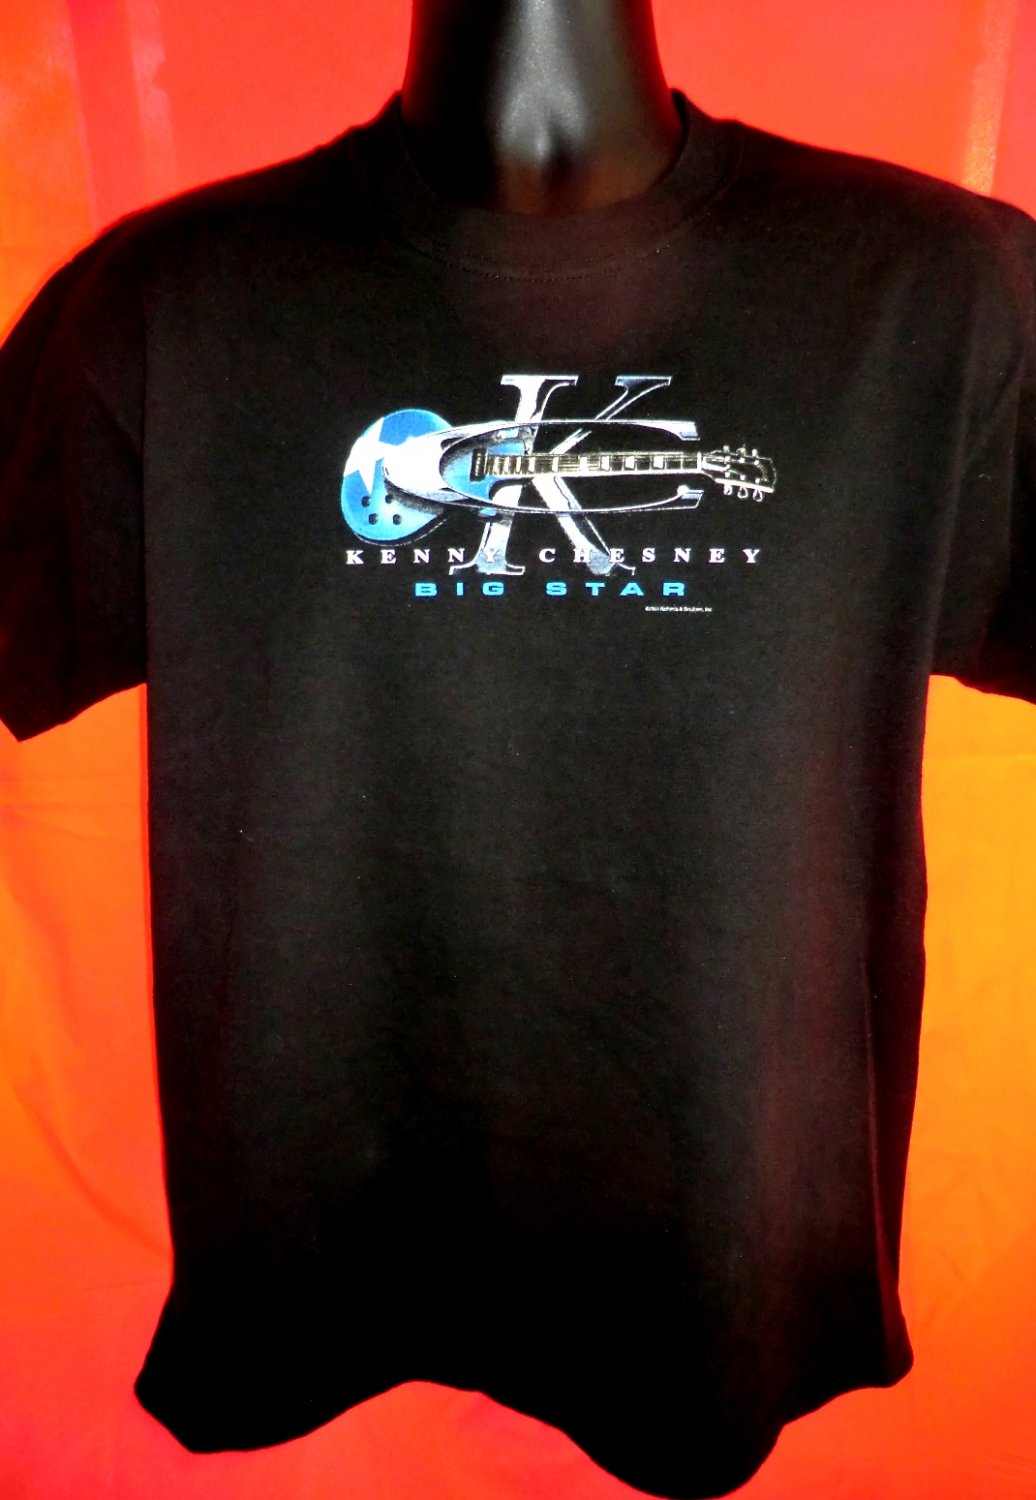 Kenny Chesney BIG STAR T-Shirt Size Medium